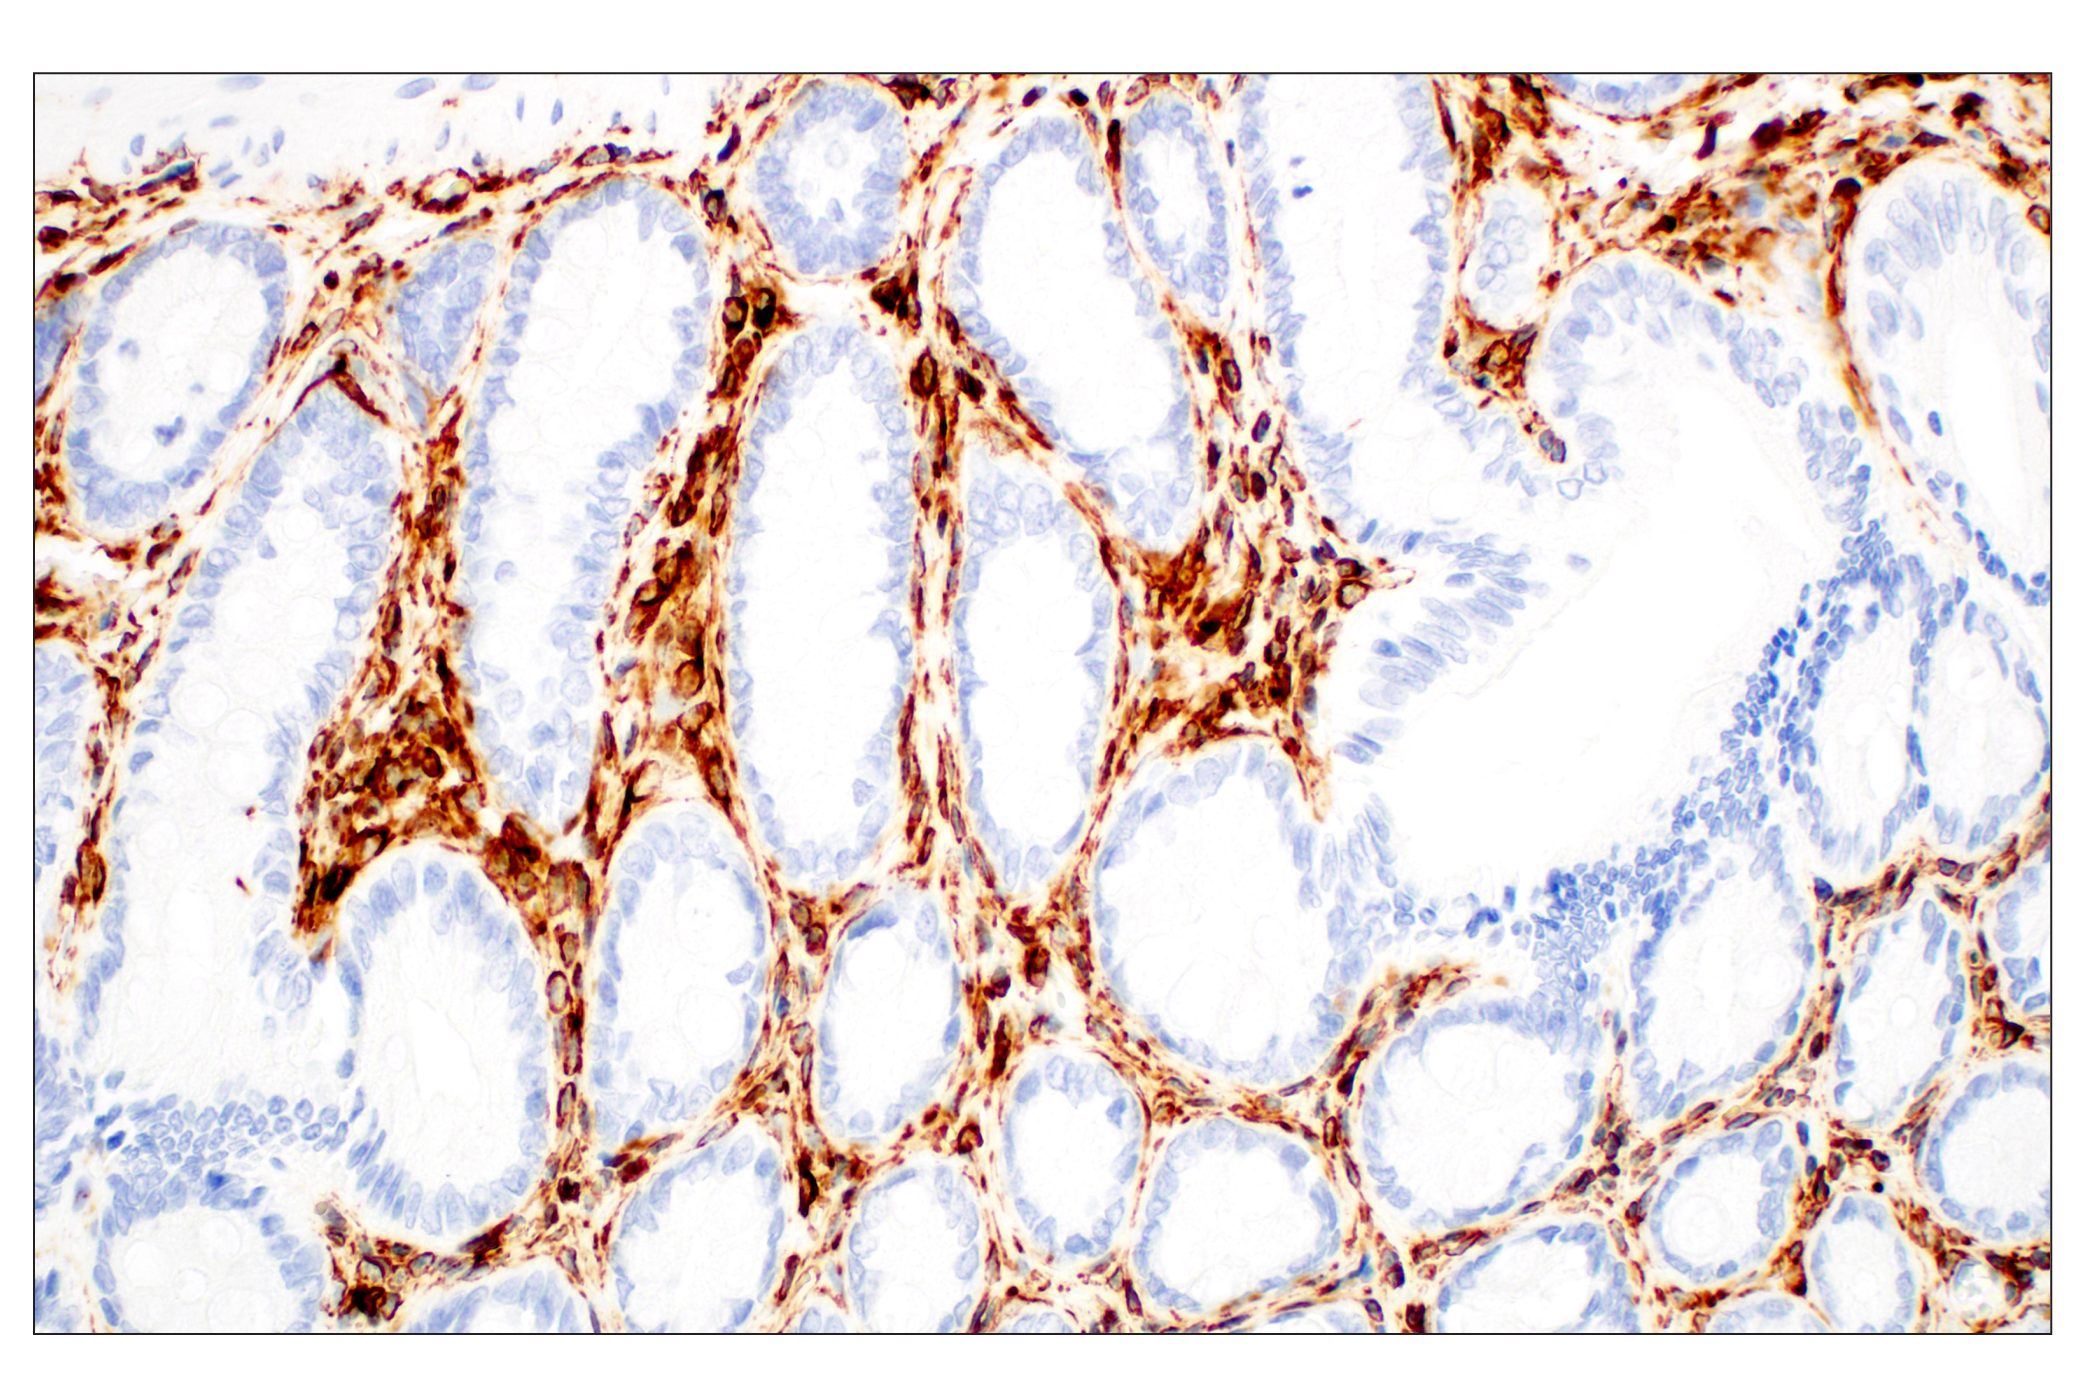  Image 39: Cytoskeletal Marker Antibody Sampler Kit